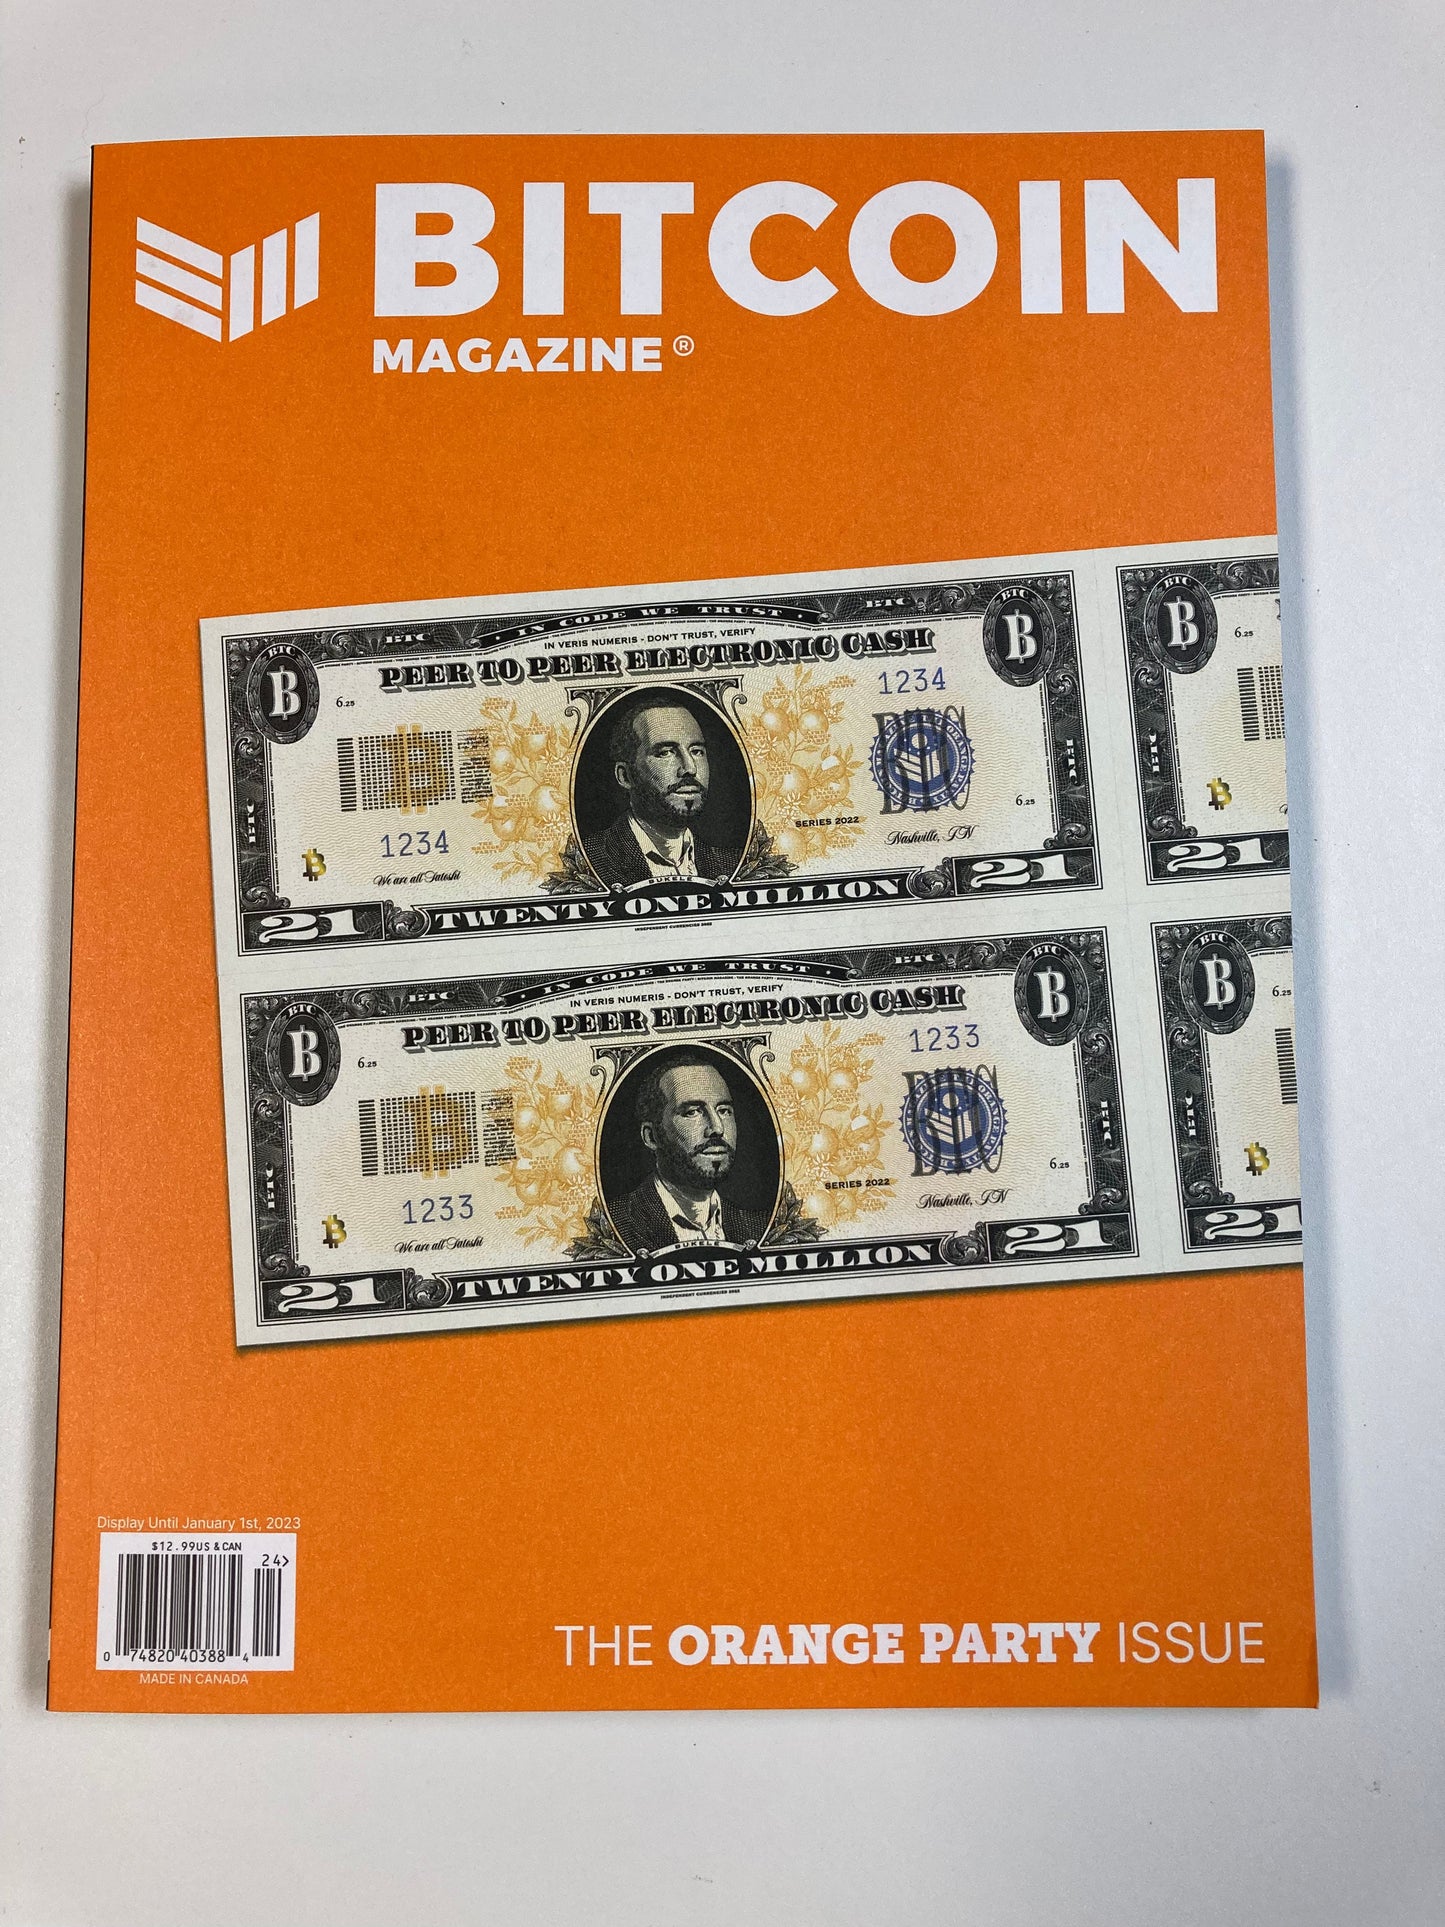 Bitcoin Magazine - The Orange Party Issue